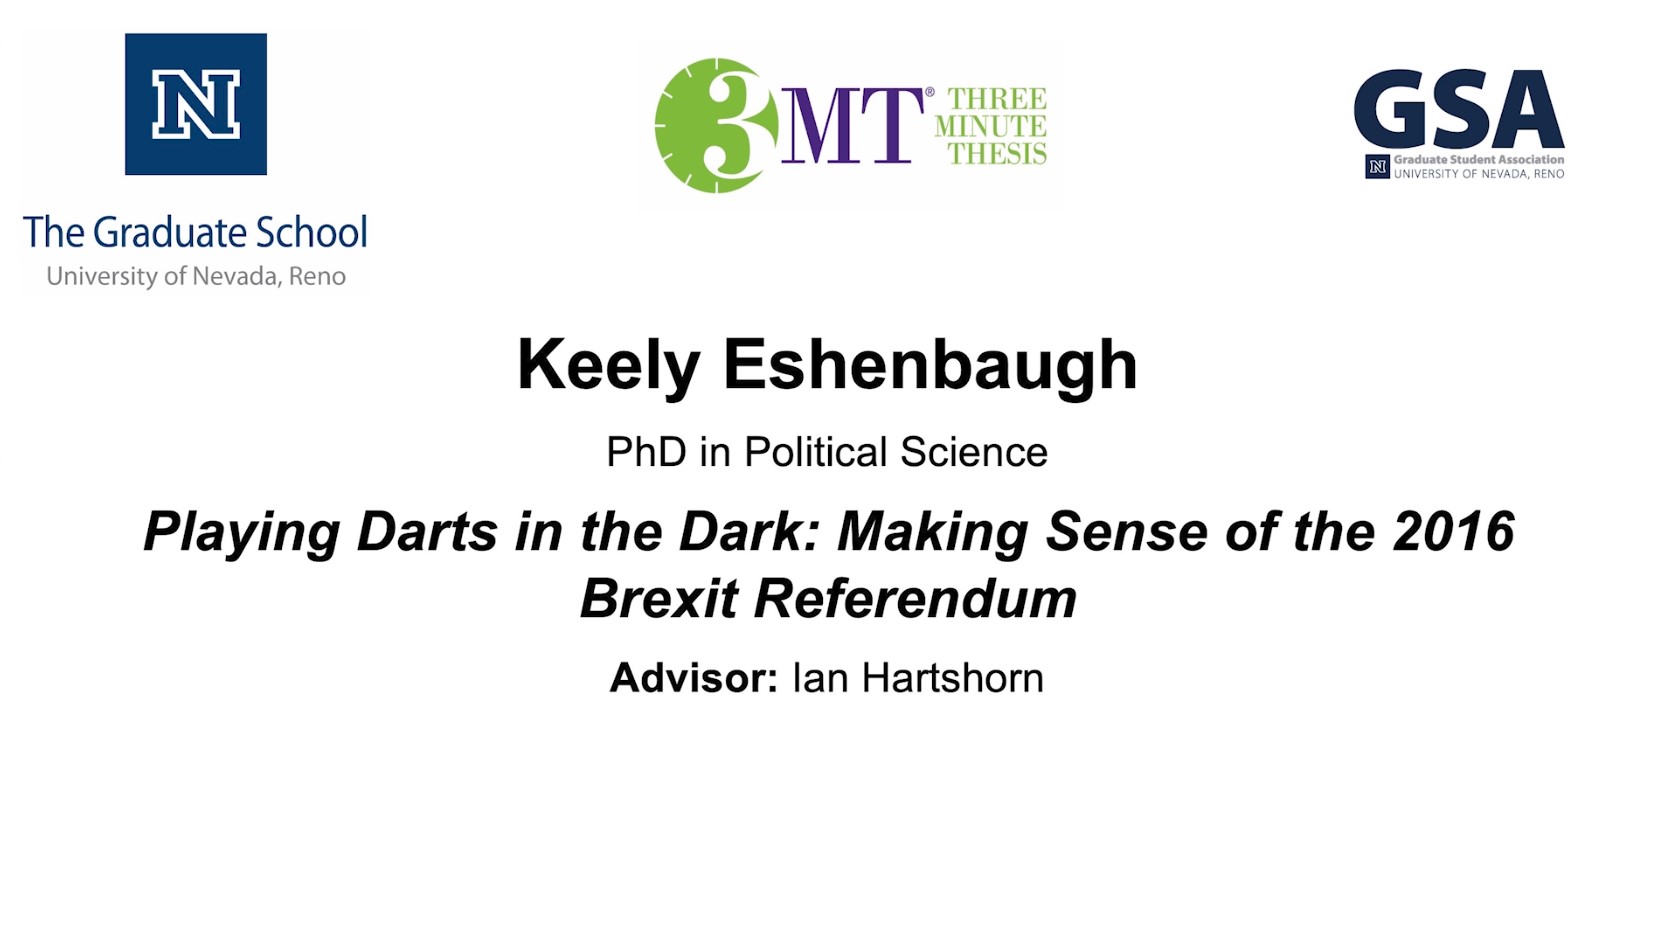 Thumbnail of Keely Eshenbaugh's title slide